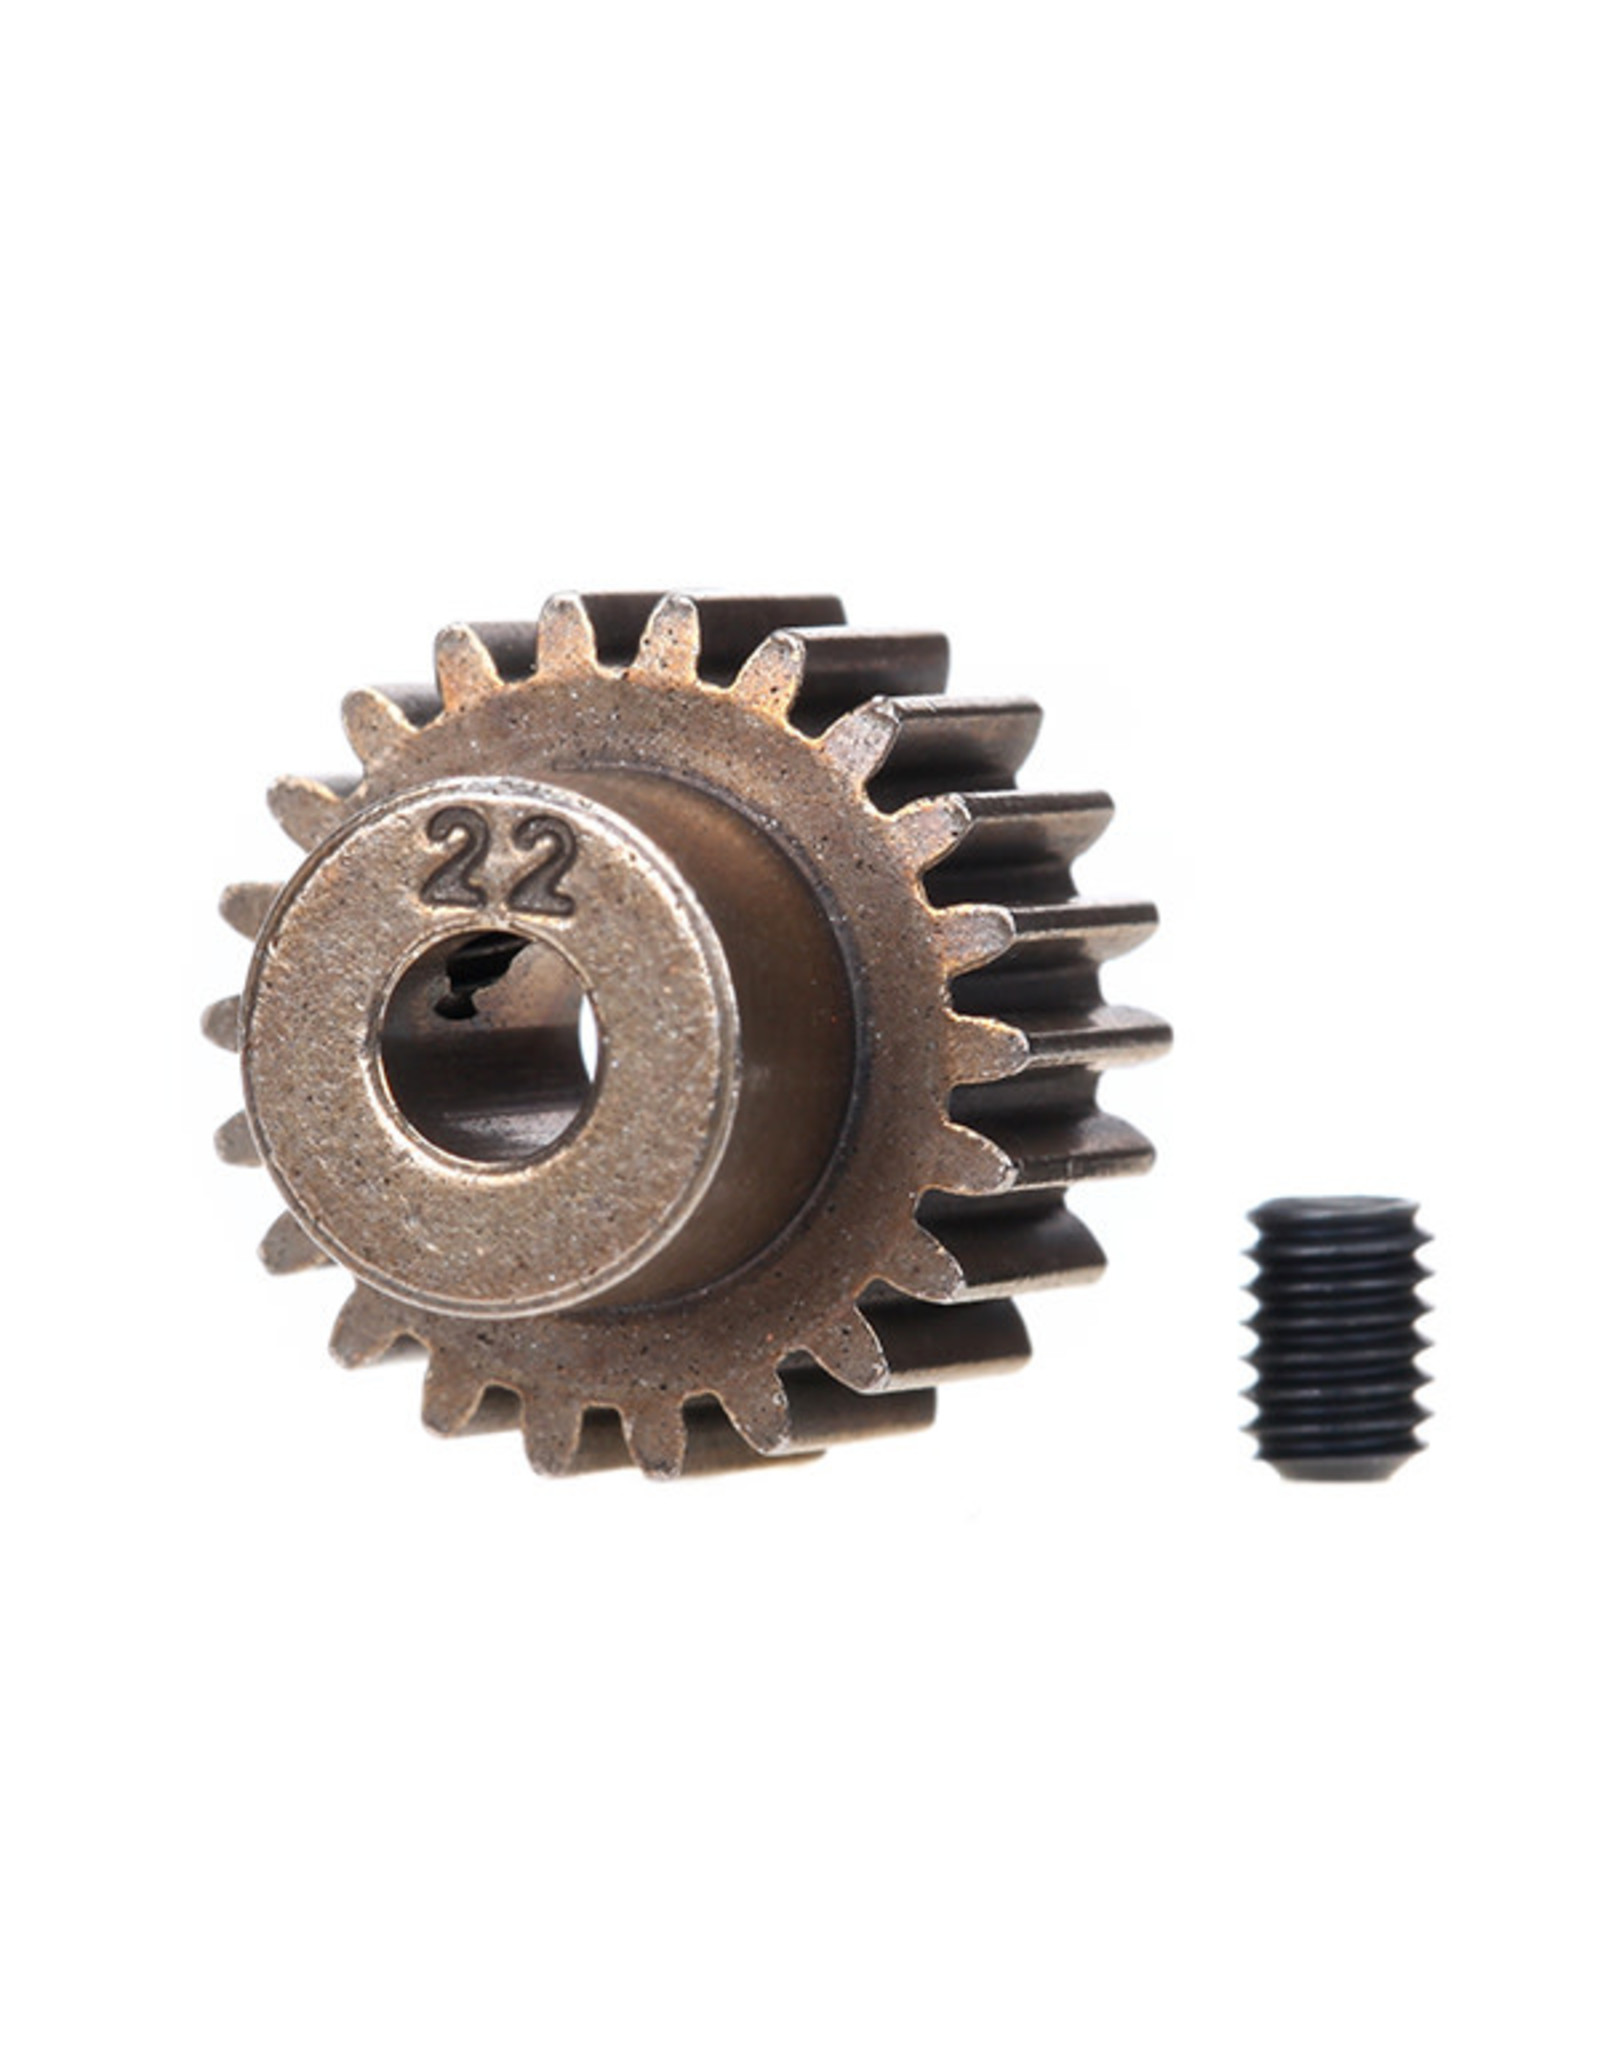 Traxxas [Gear, 22-T pinion (48-pitch) / set screw] Gear, 22-T pinion (48-pitch) / set screw